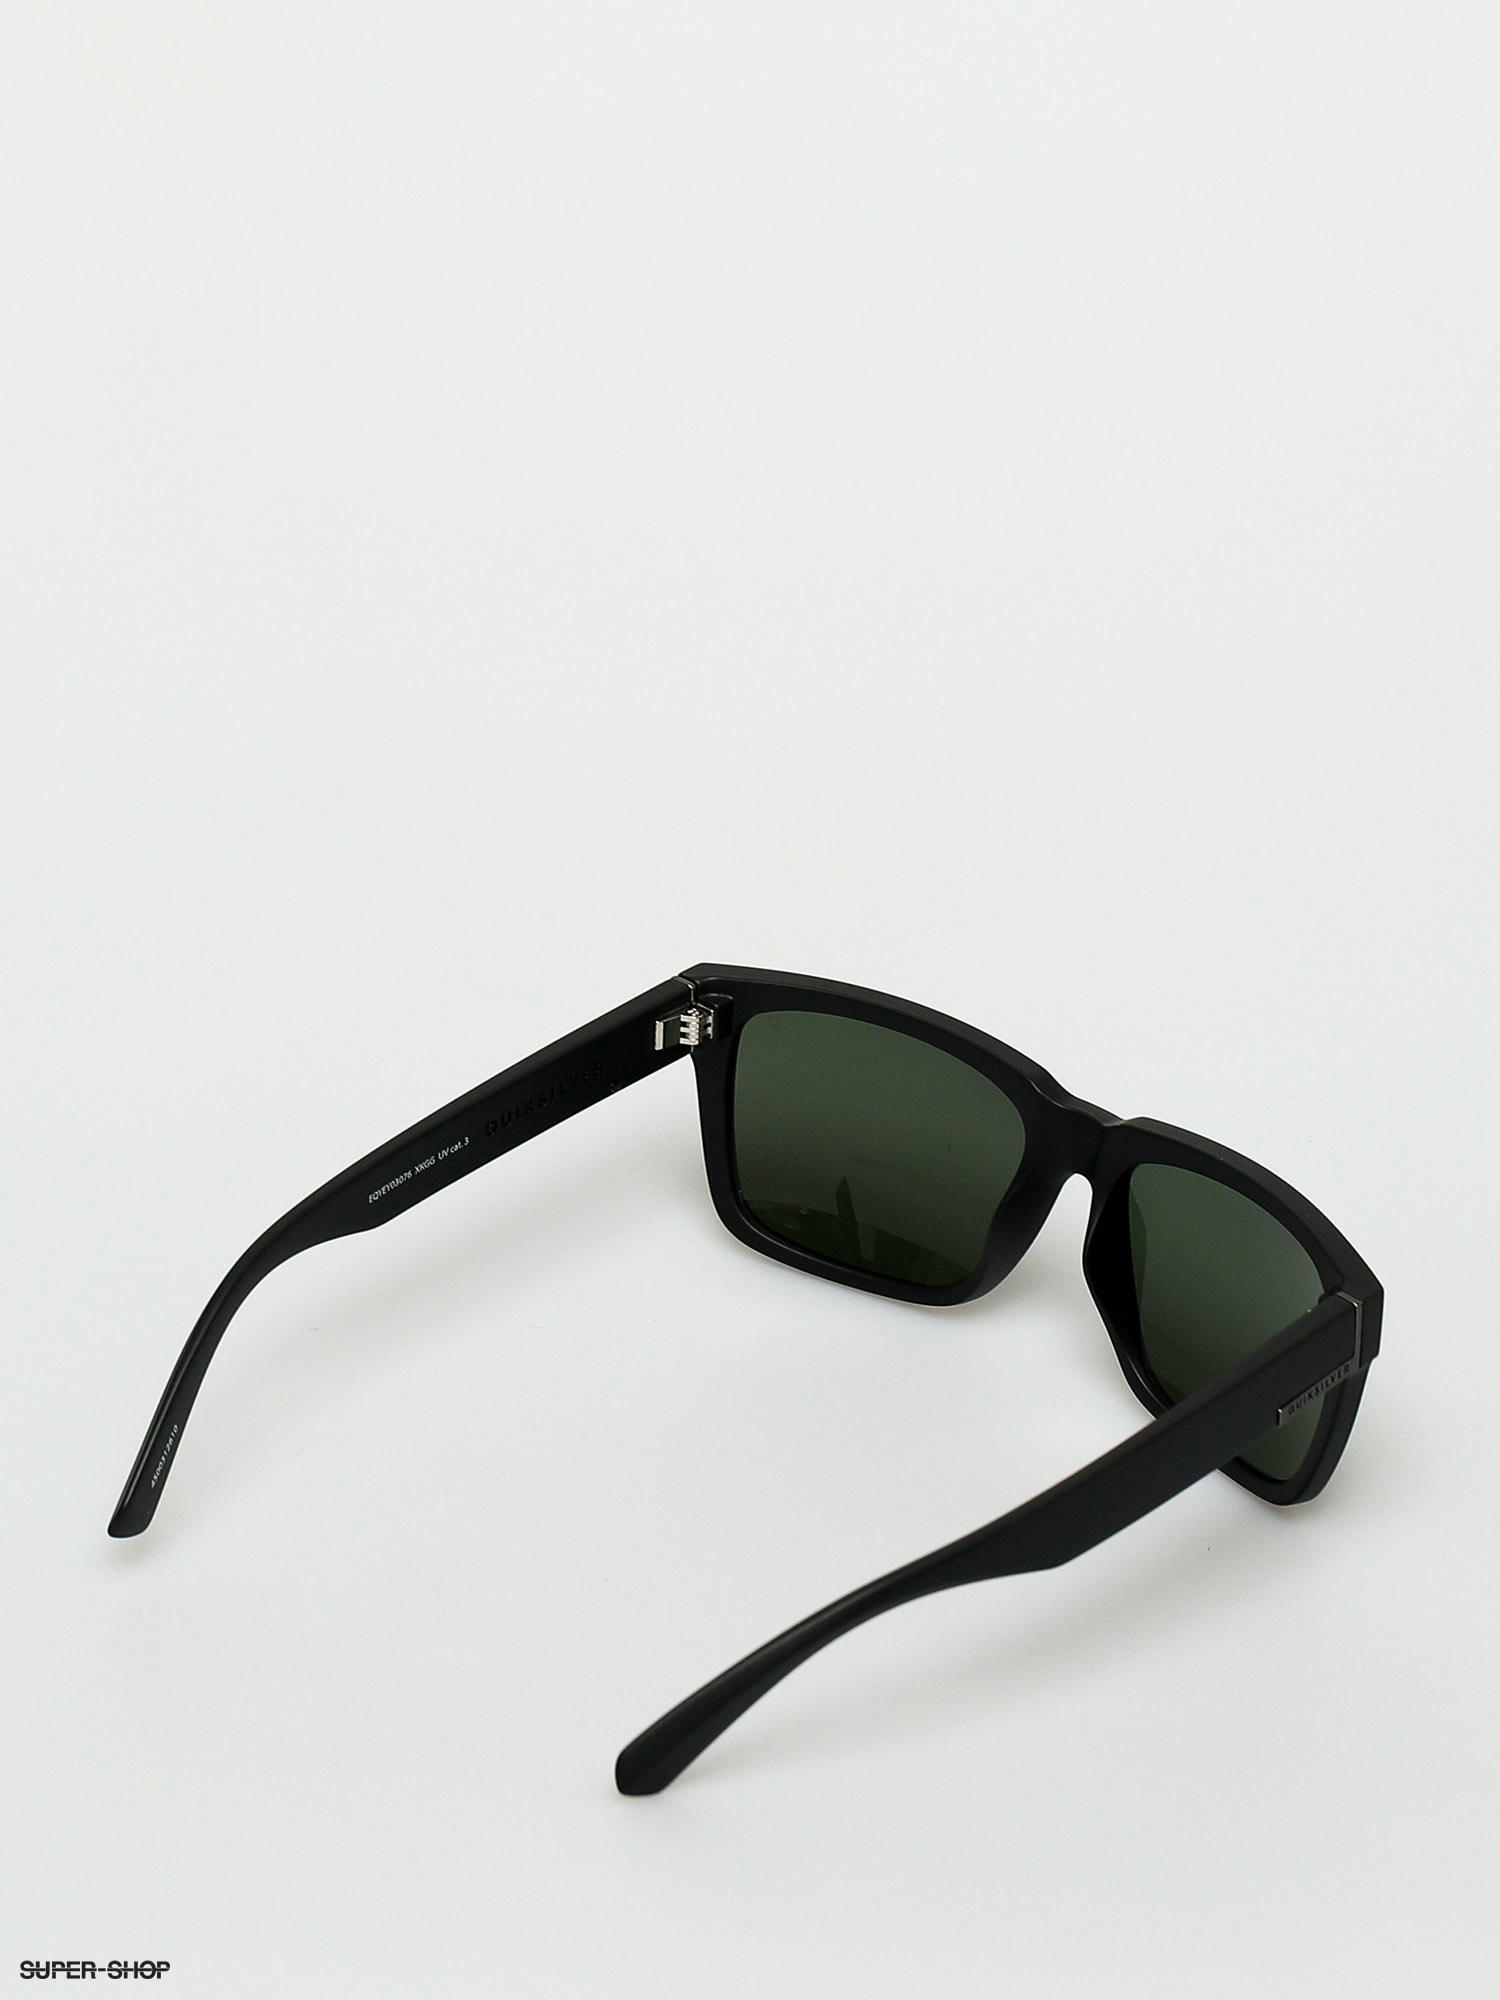 Quiksilver Bruiser Polarized black/green (matte Sunglasses p)